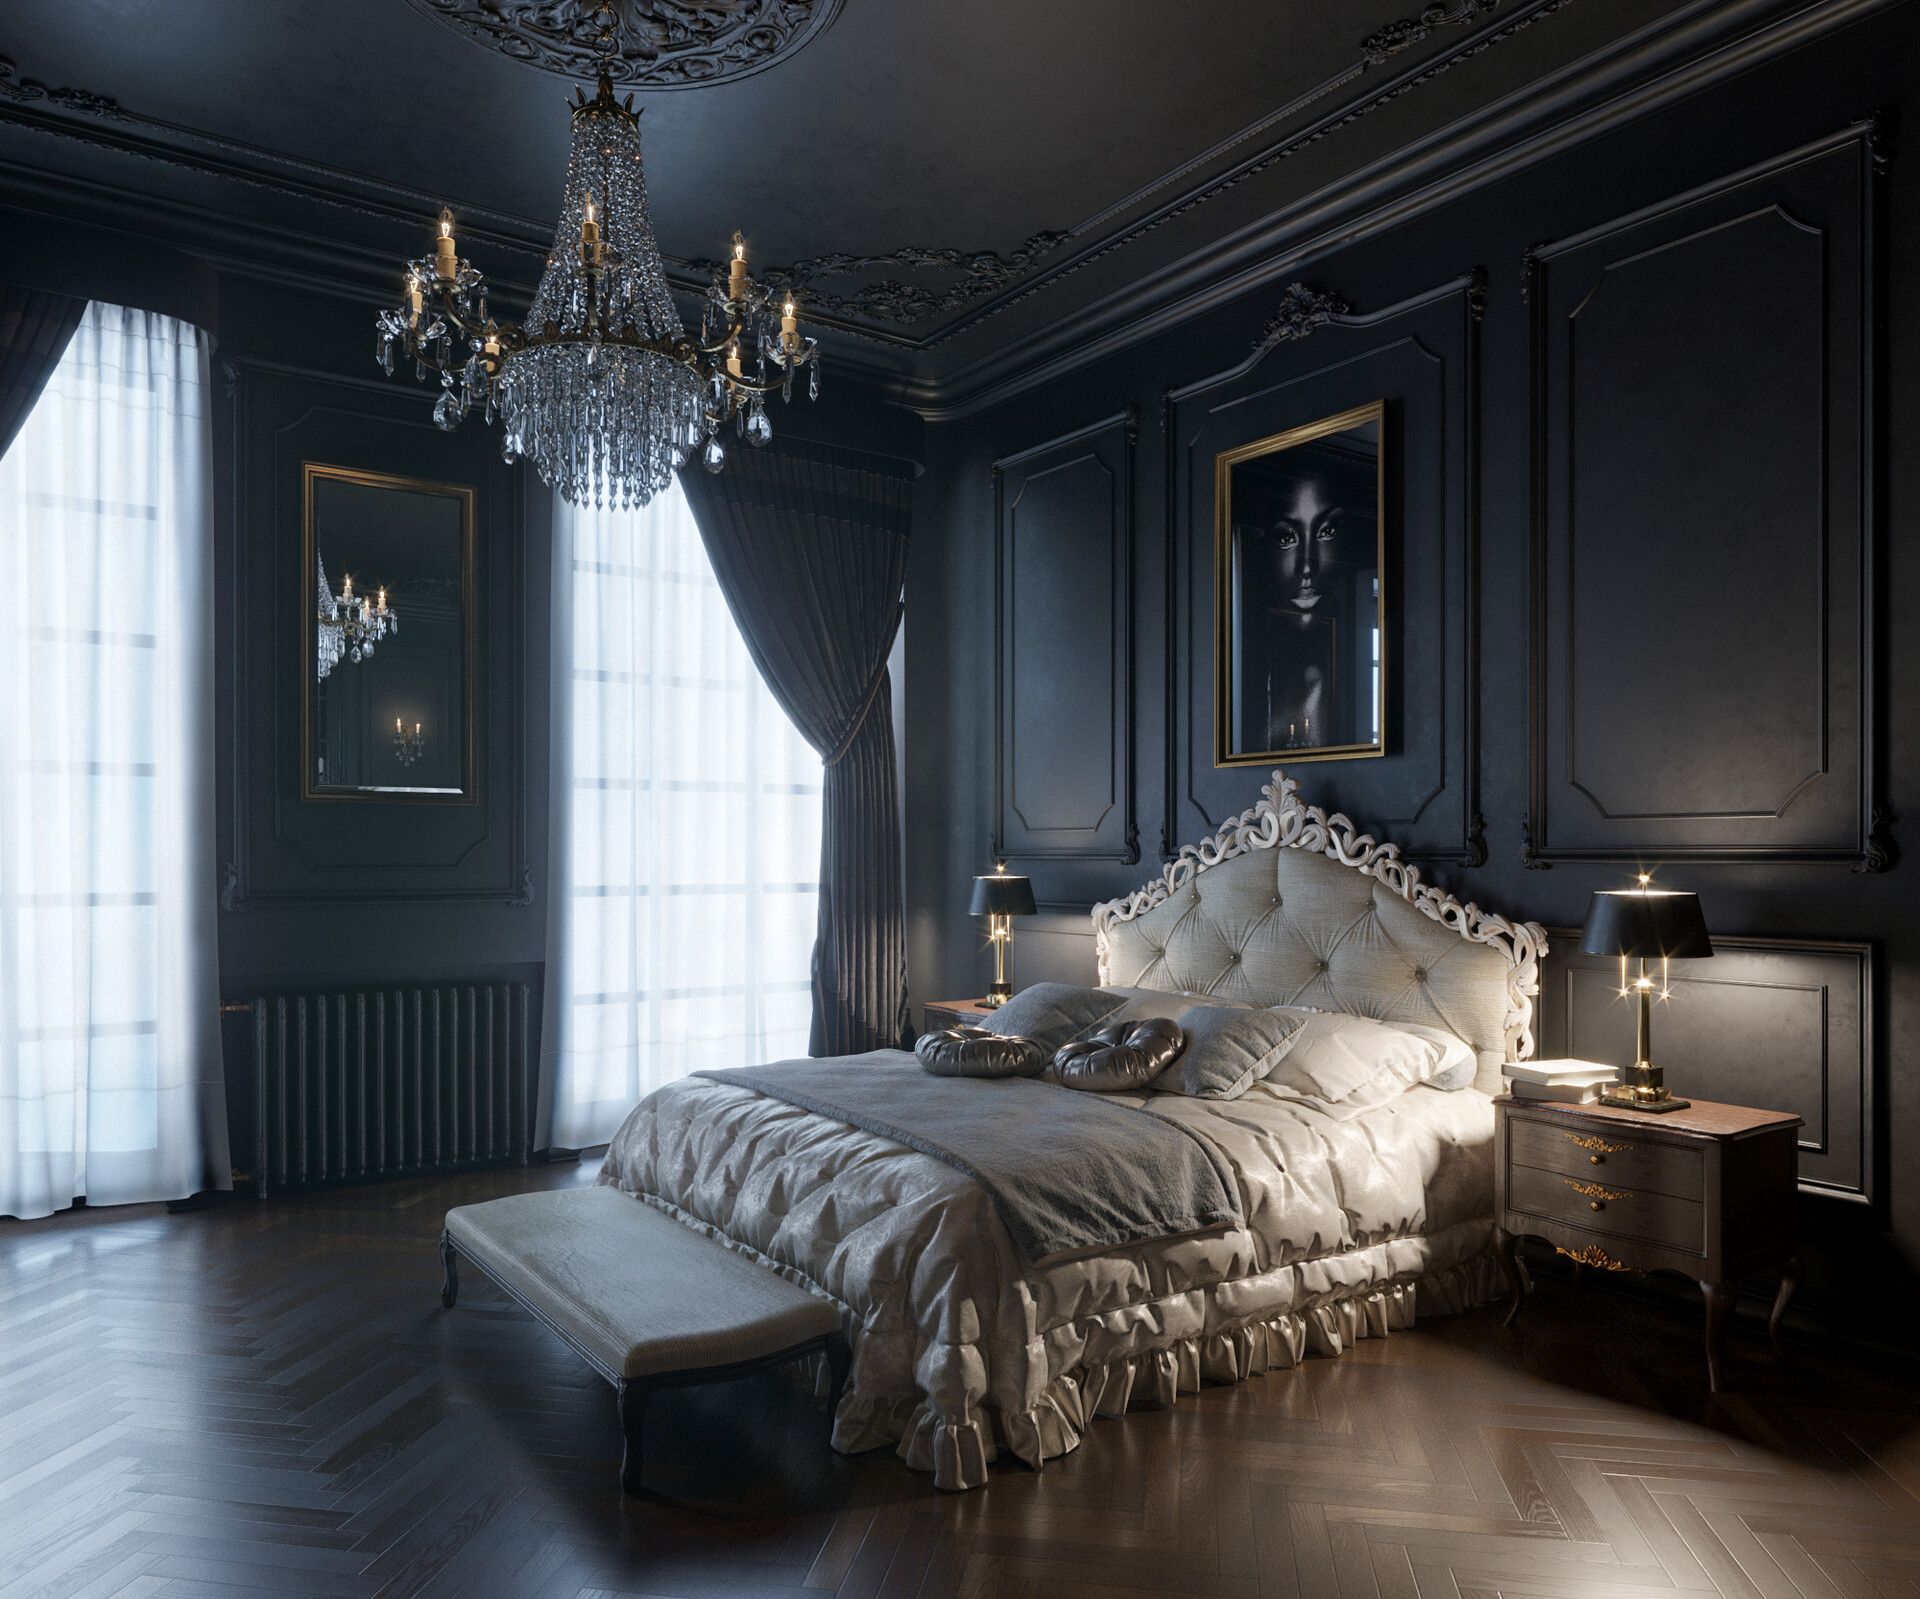 Sophisticated Dark Interior Of Bedroom